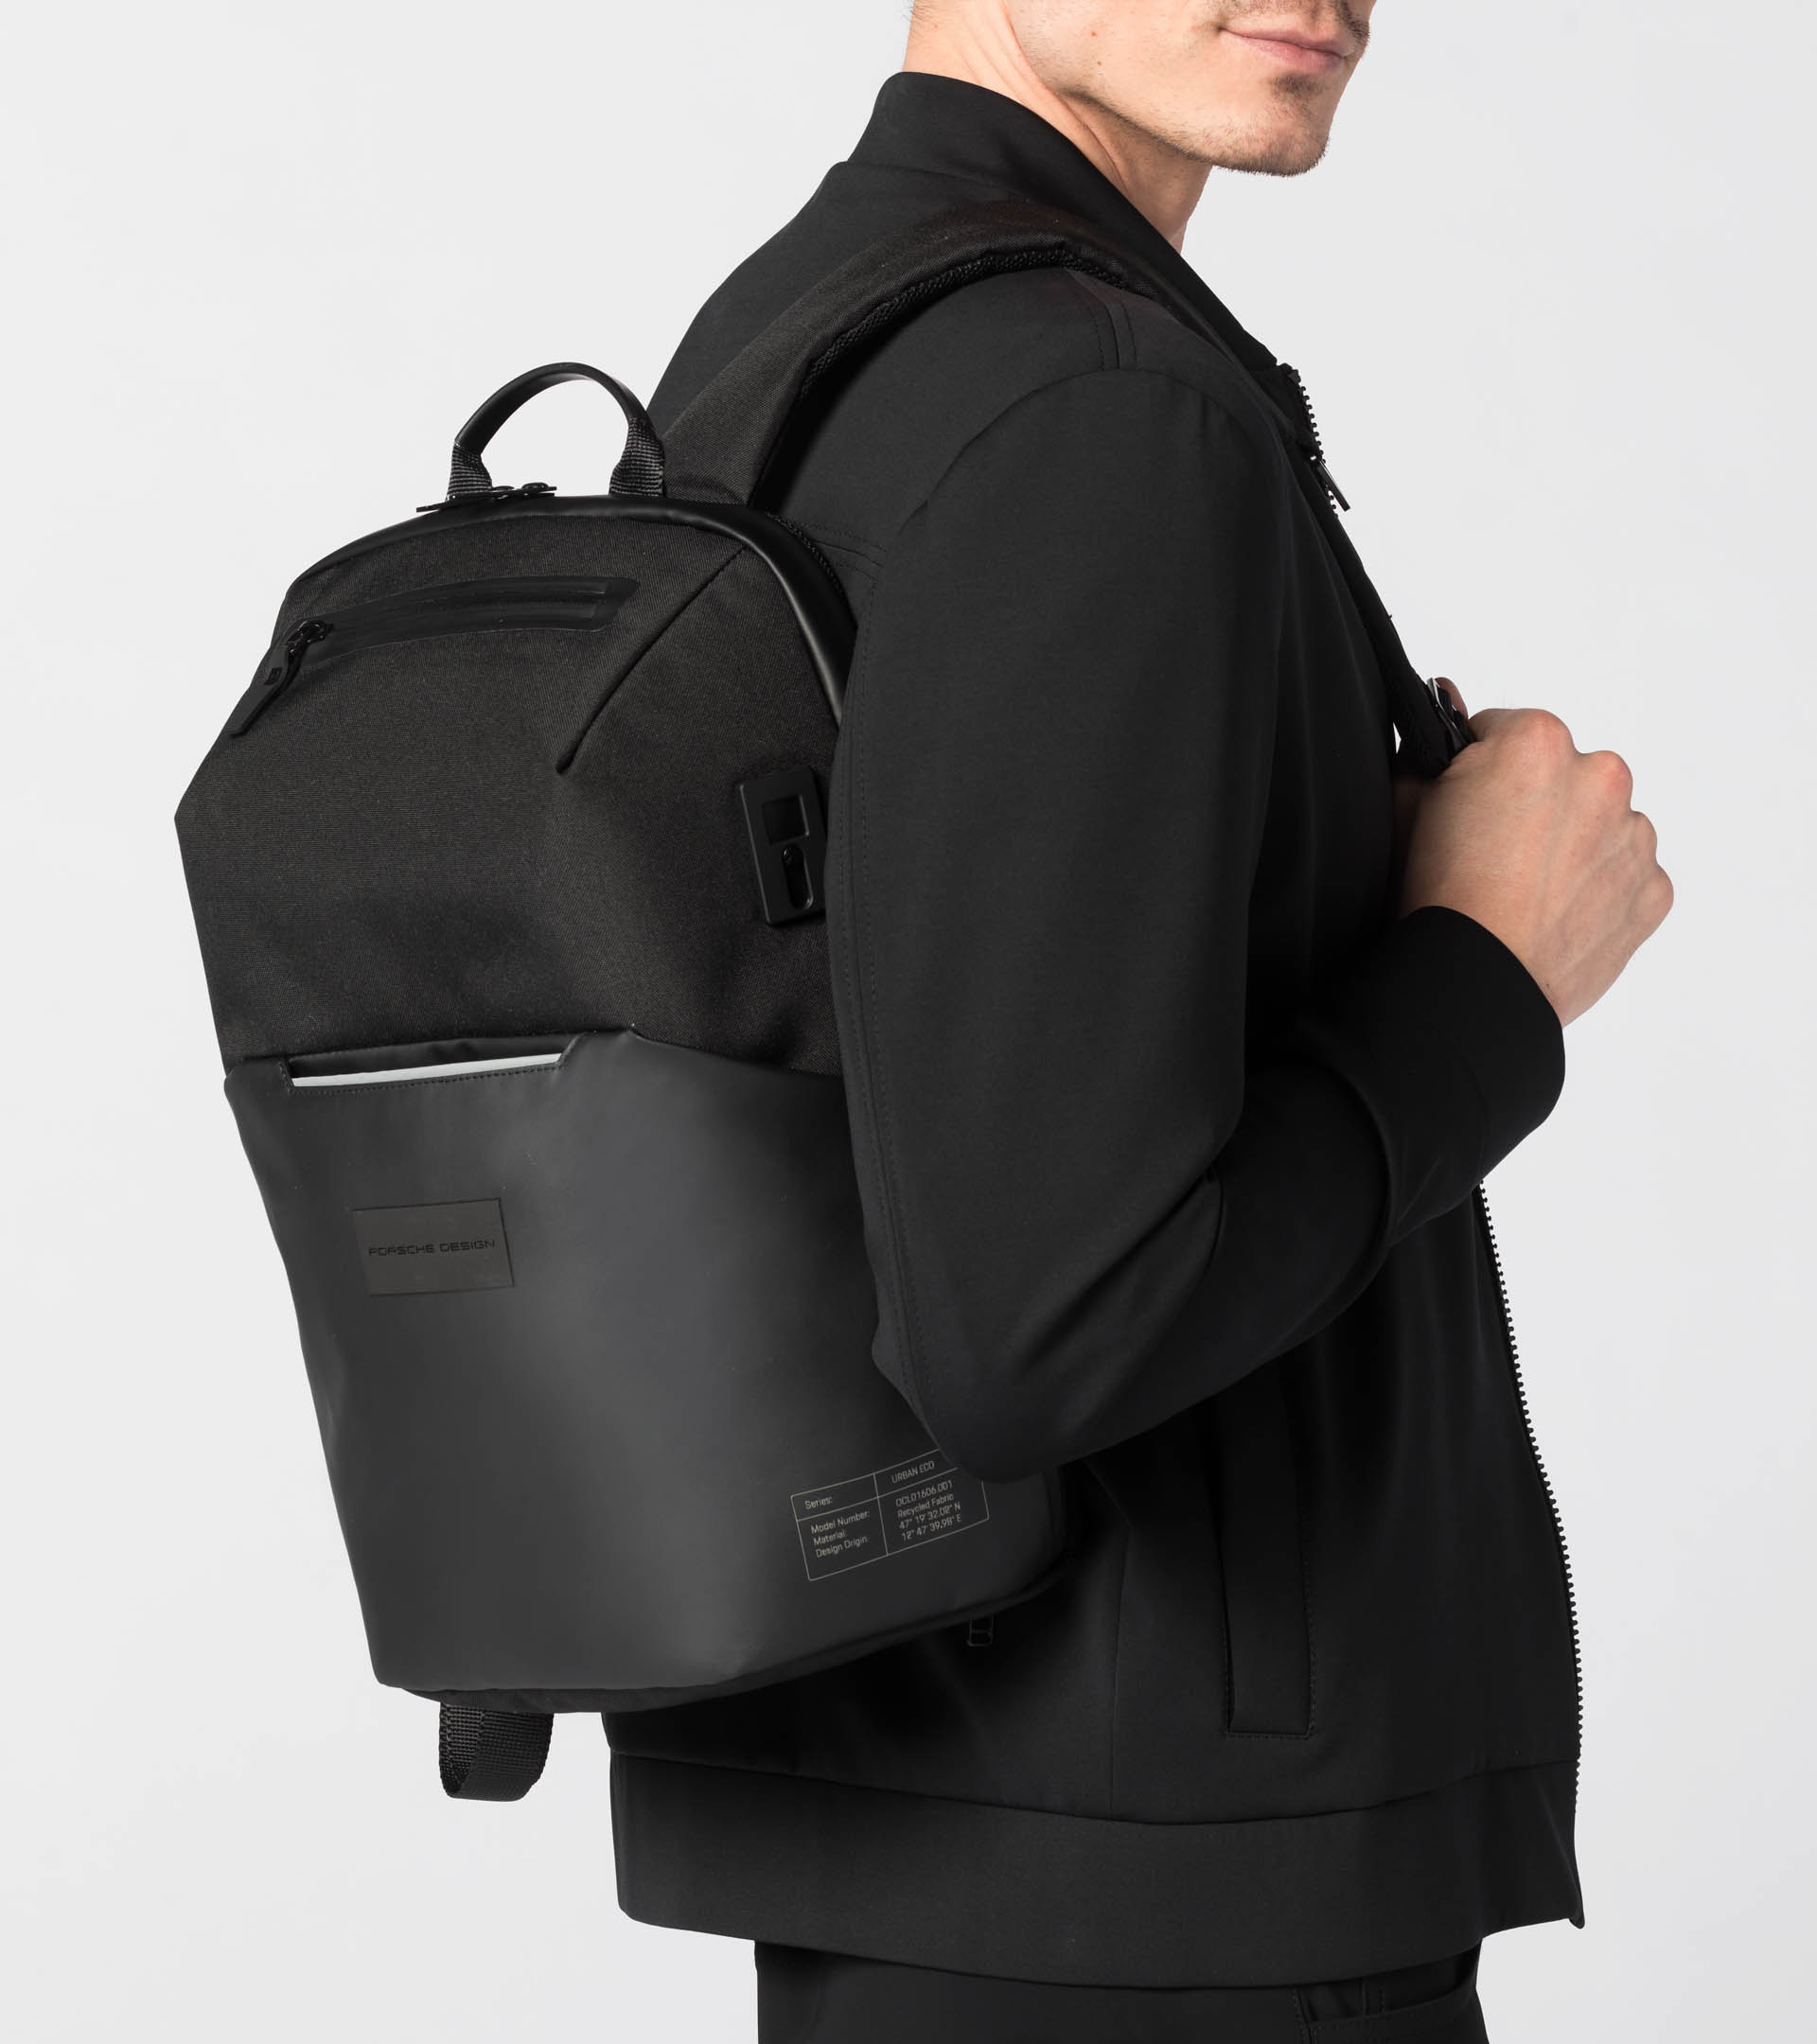 Urban Eco Backpack XS - Business Backpack for Men | Porsche Design ...